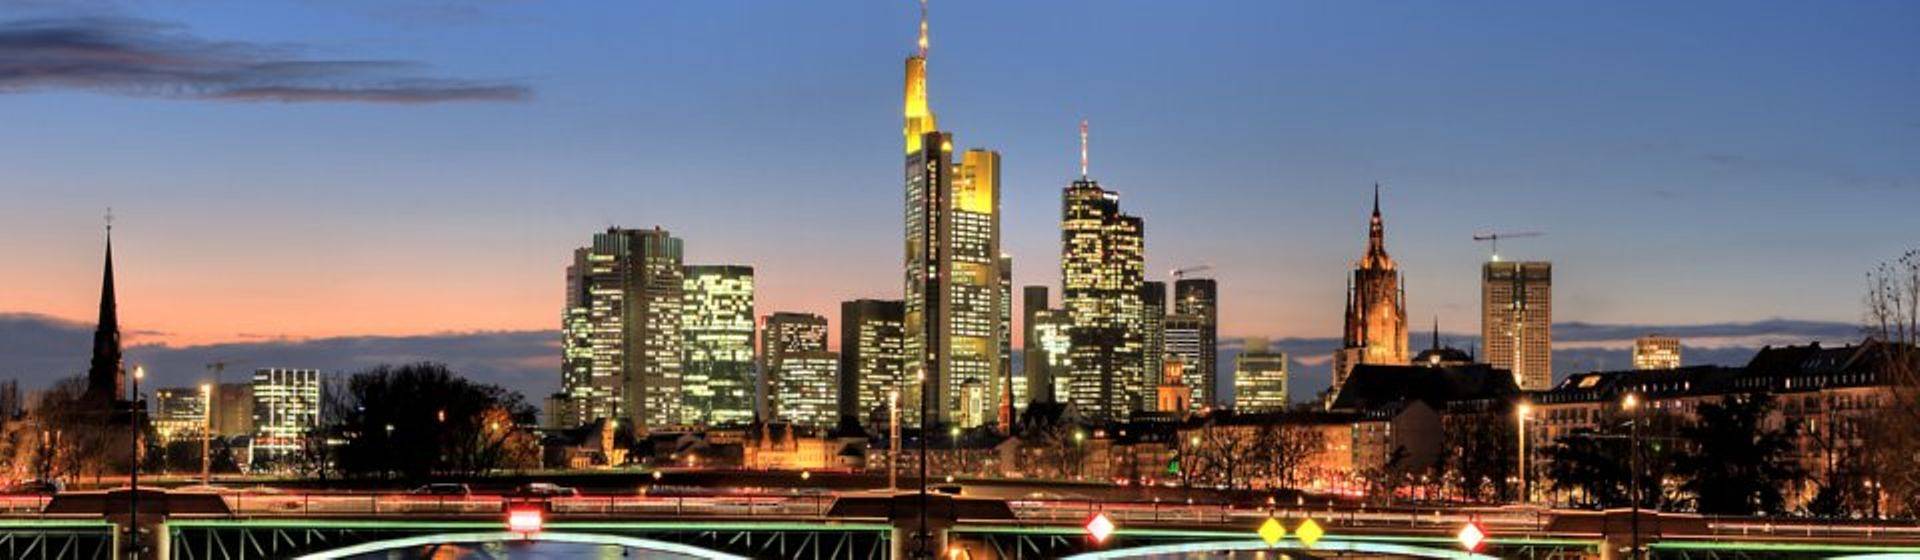 Holidays to Frankfurt Image